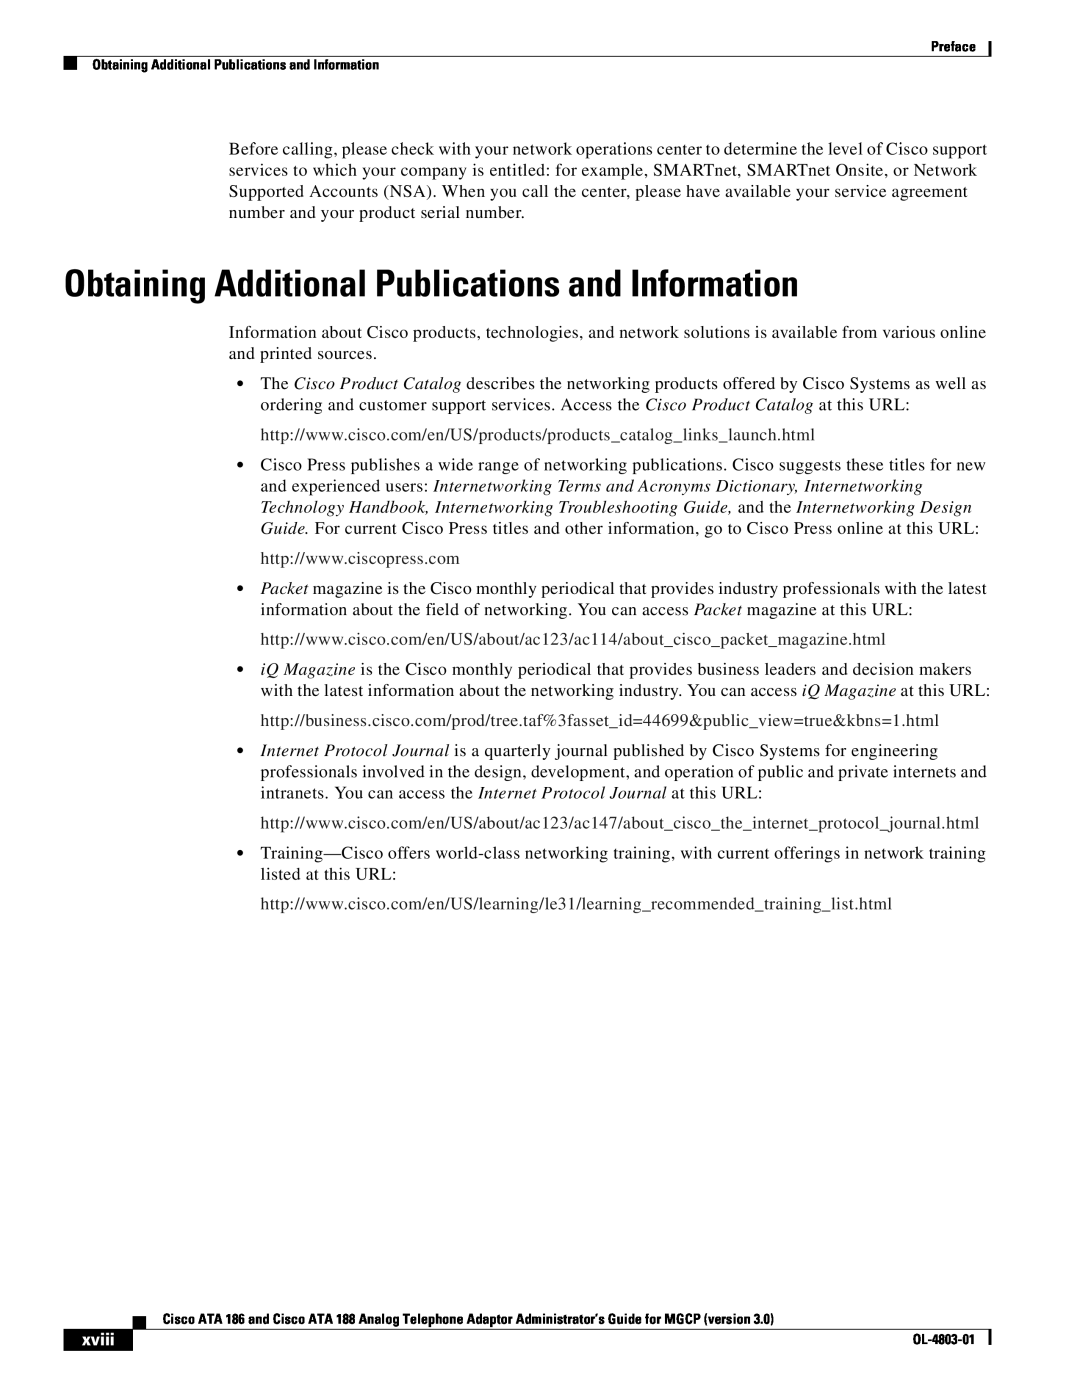 Cisco Systems ATA 186, ATA 188 manual Obtaining Additional Publications and Information, xviii 